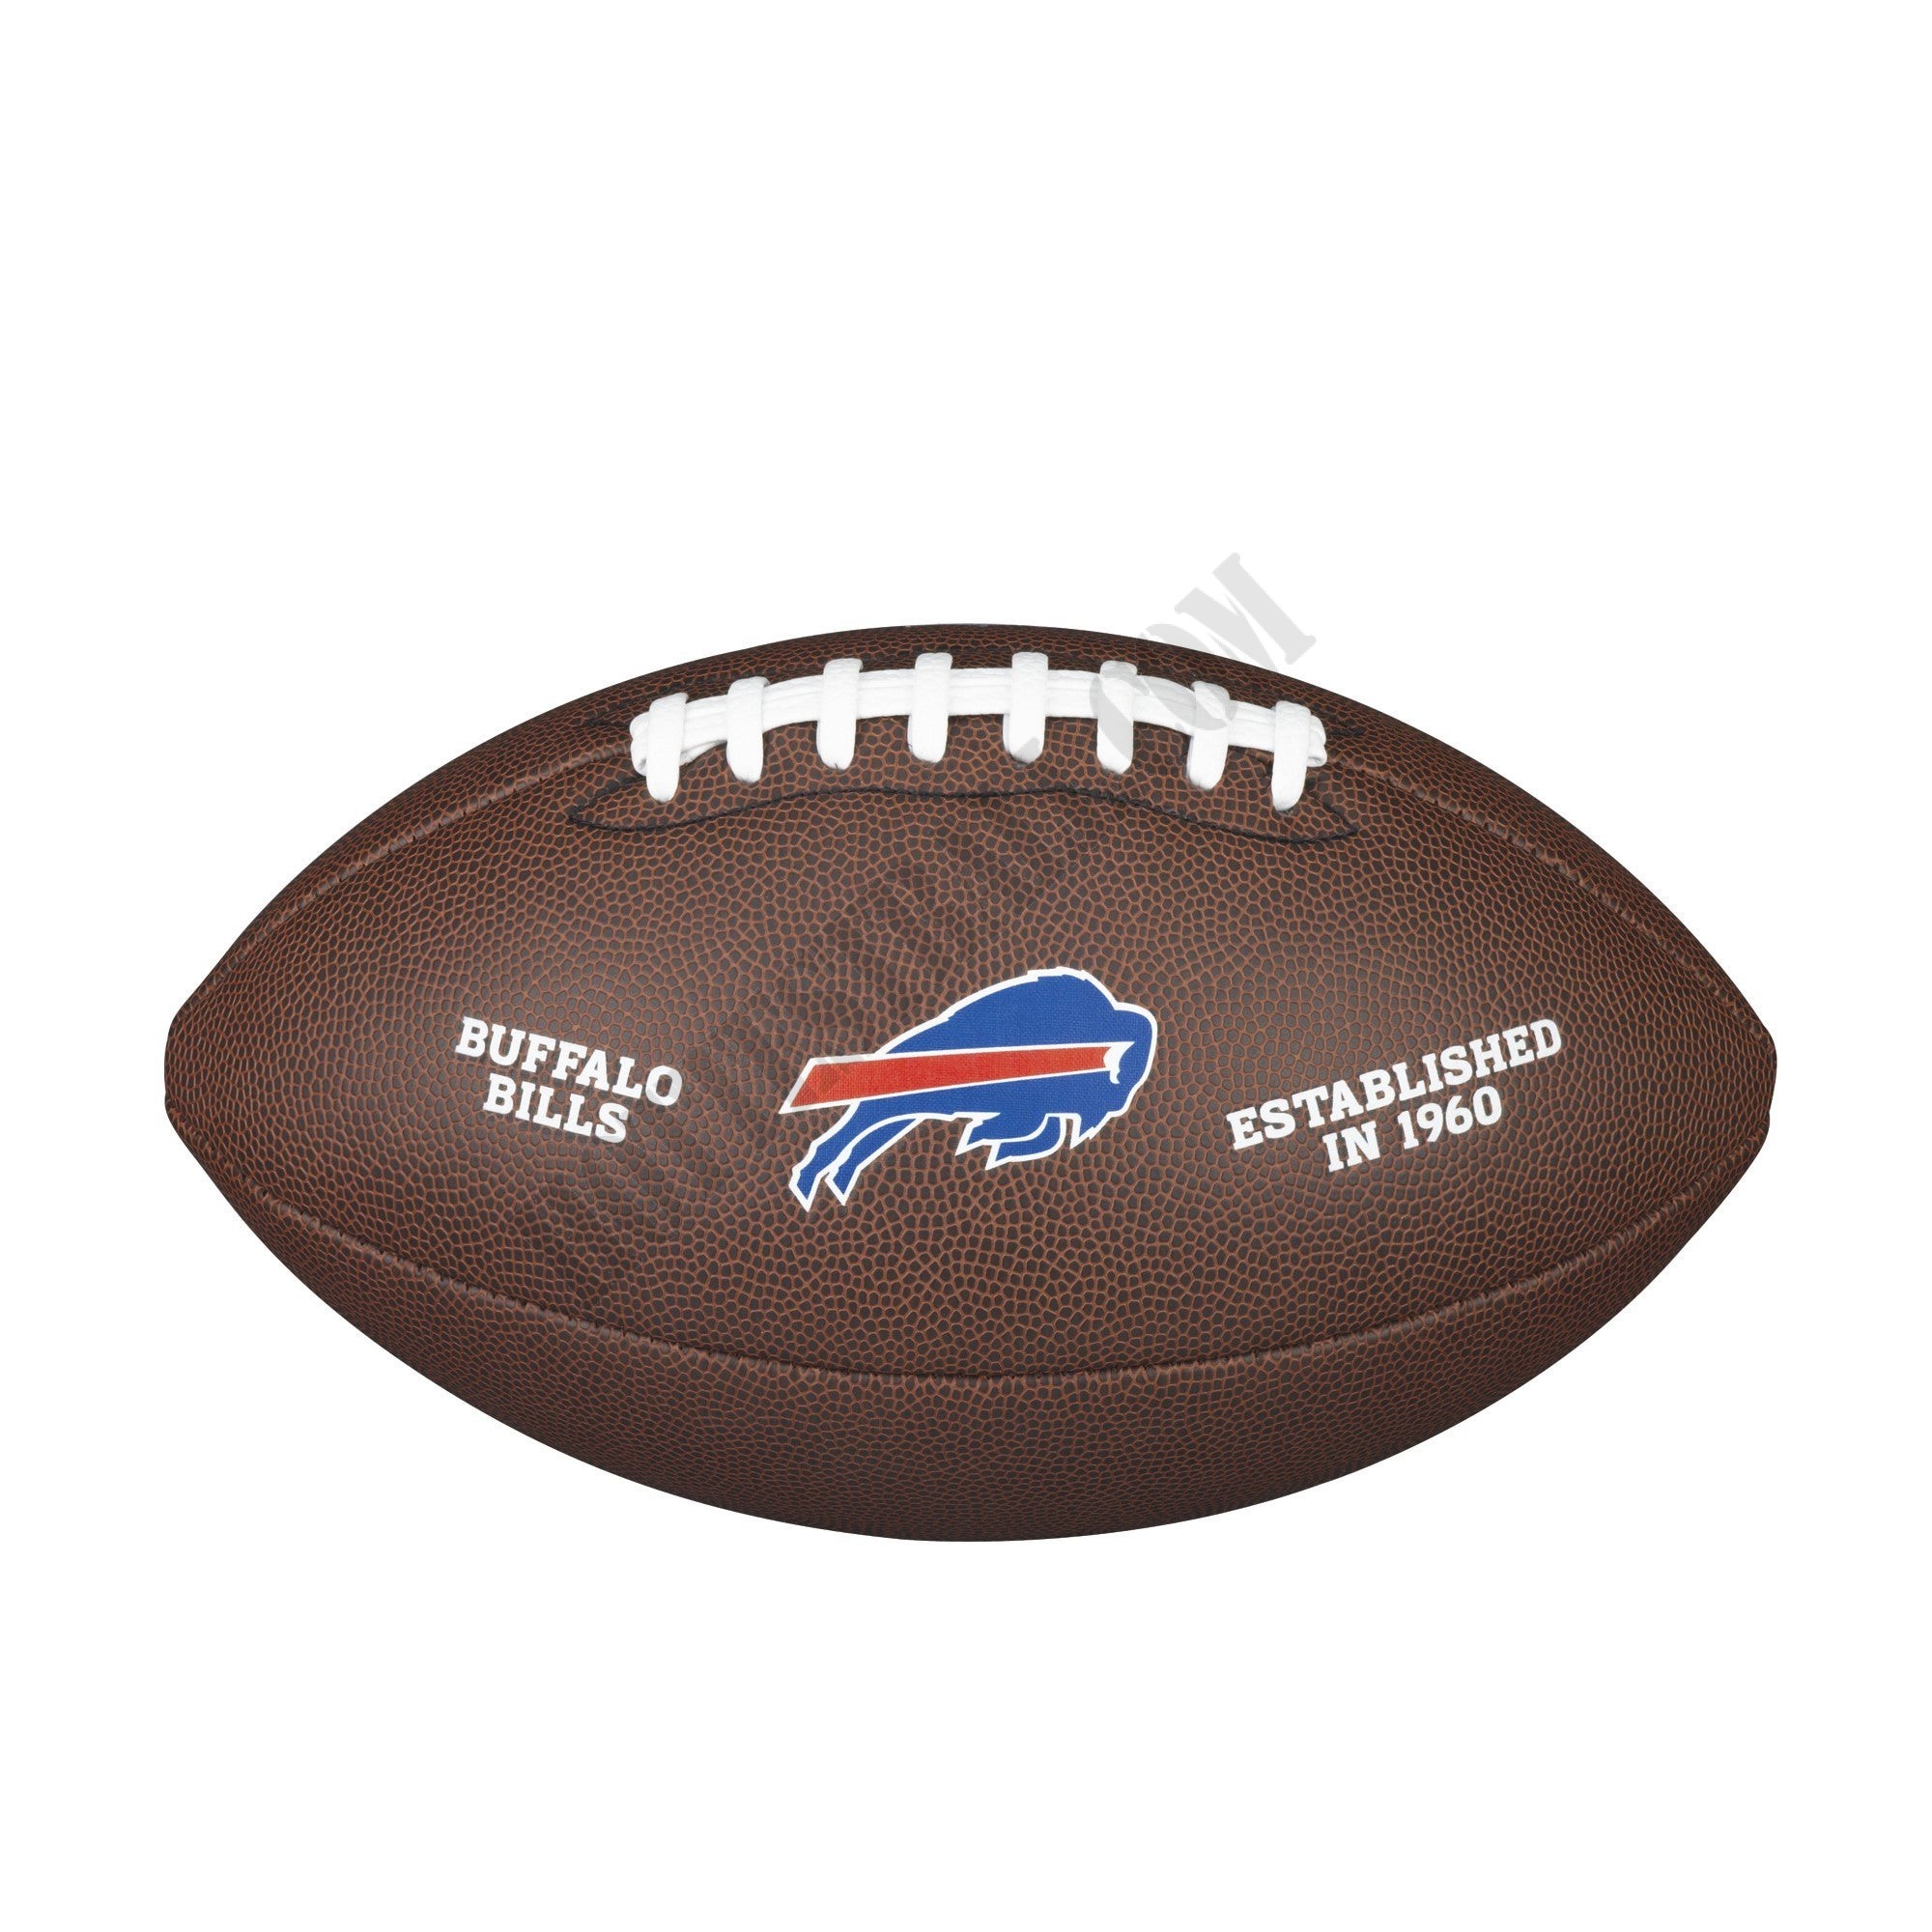 NFL Backyard Legend Football - Buffalo Bills ● Wilson Promotions - NFL Backyard Legend Football - Buffalo Bills ● Wilson Promotions